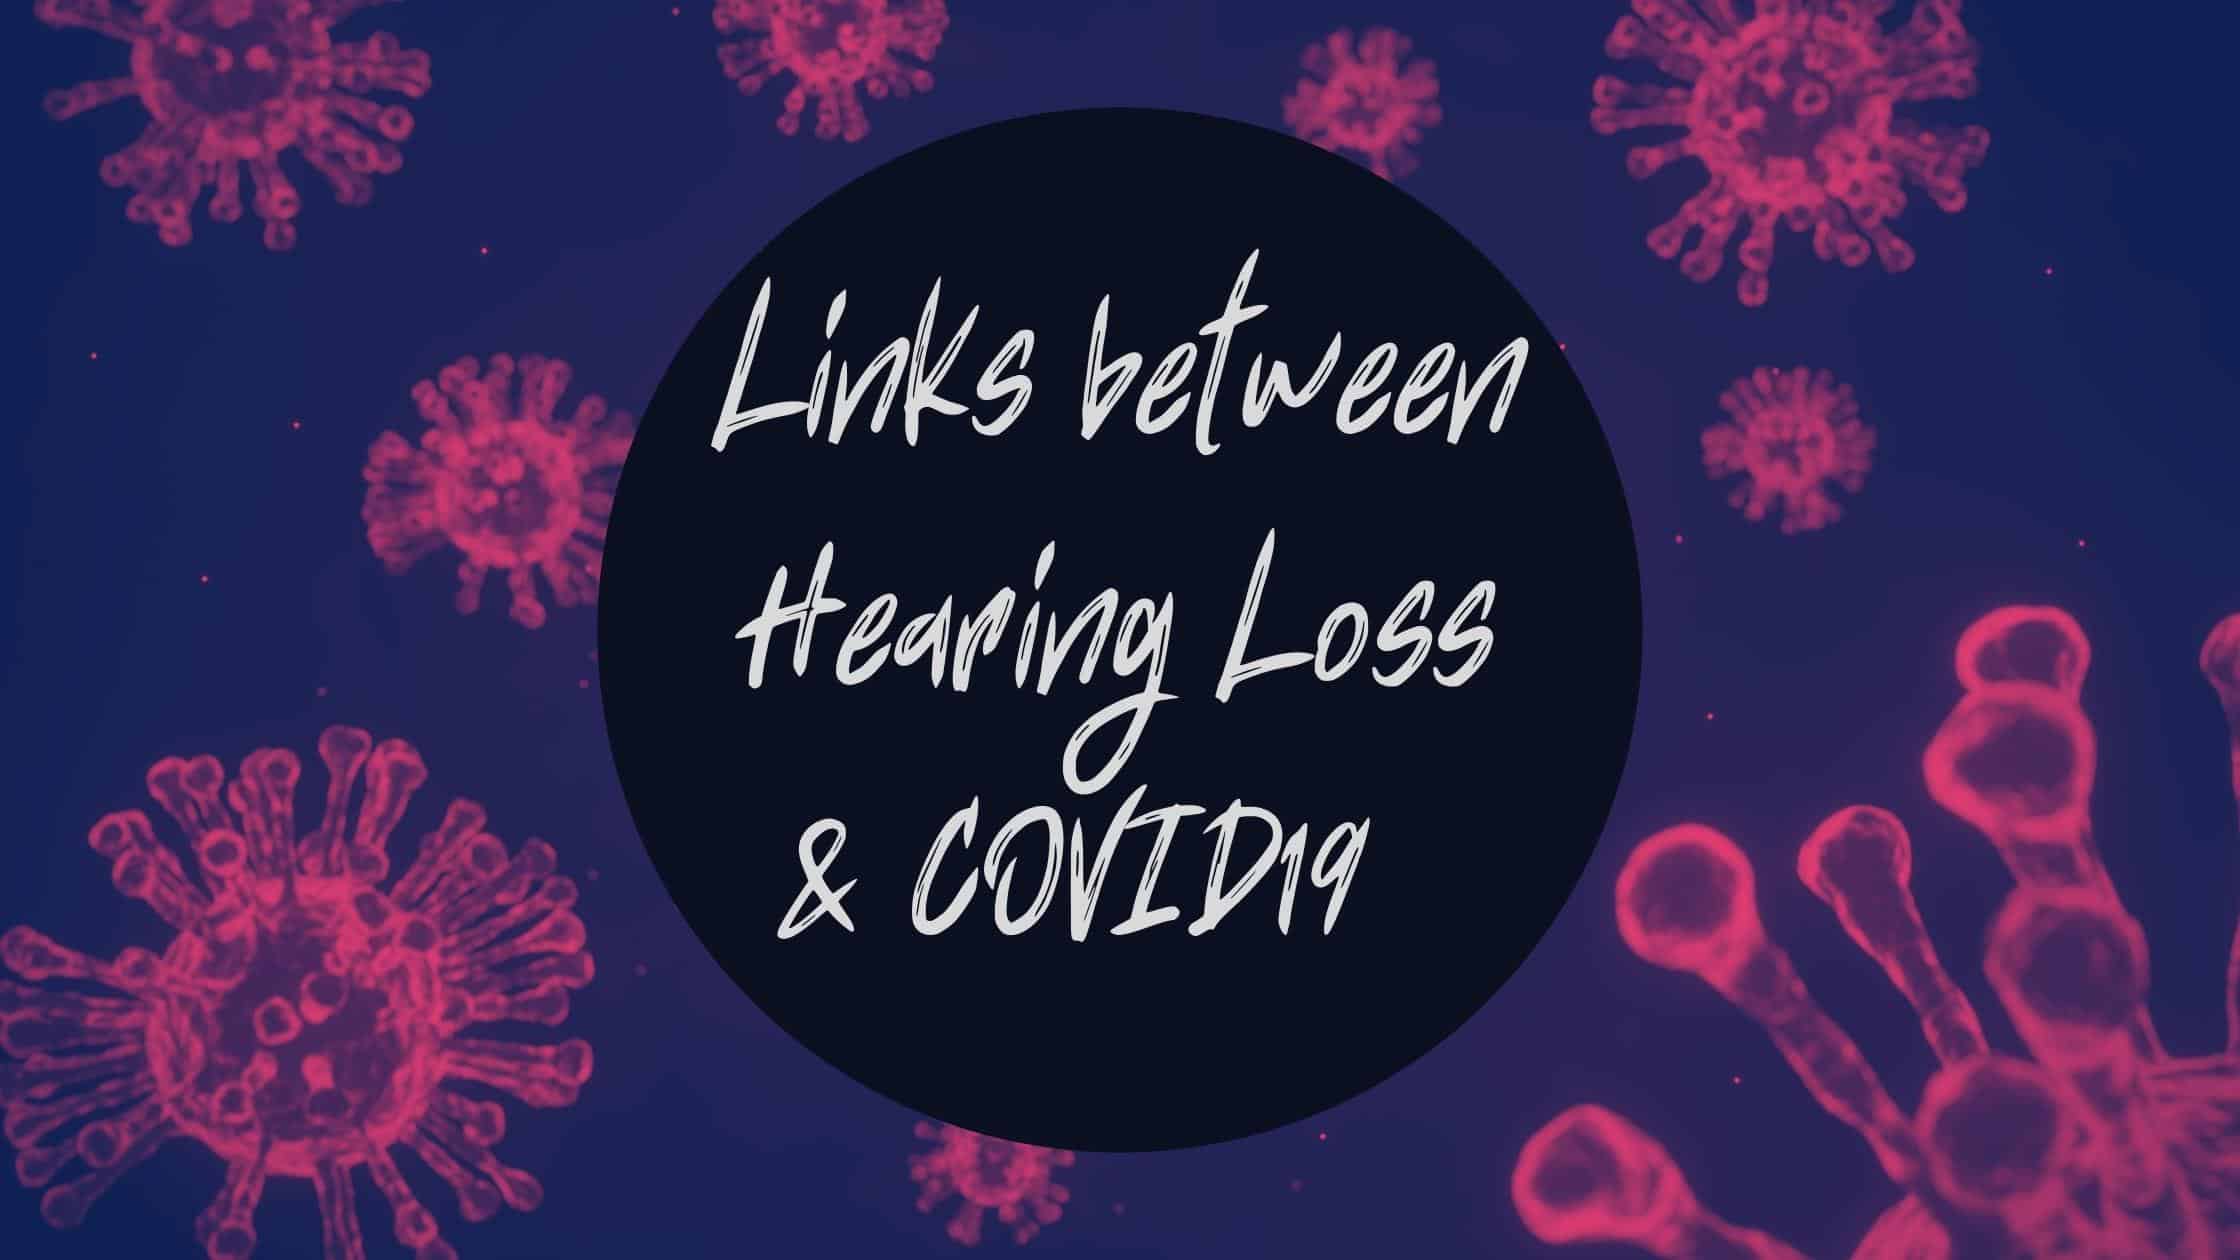 Links between Hearing Loss & COVID19